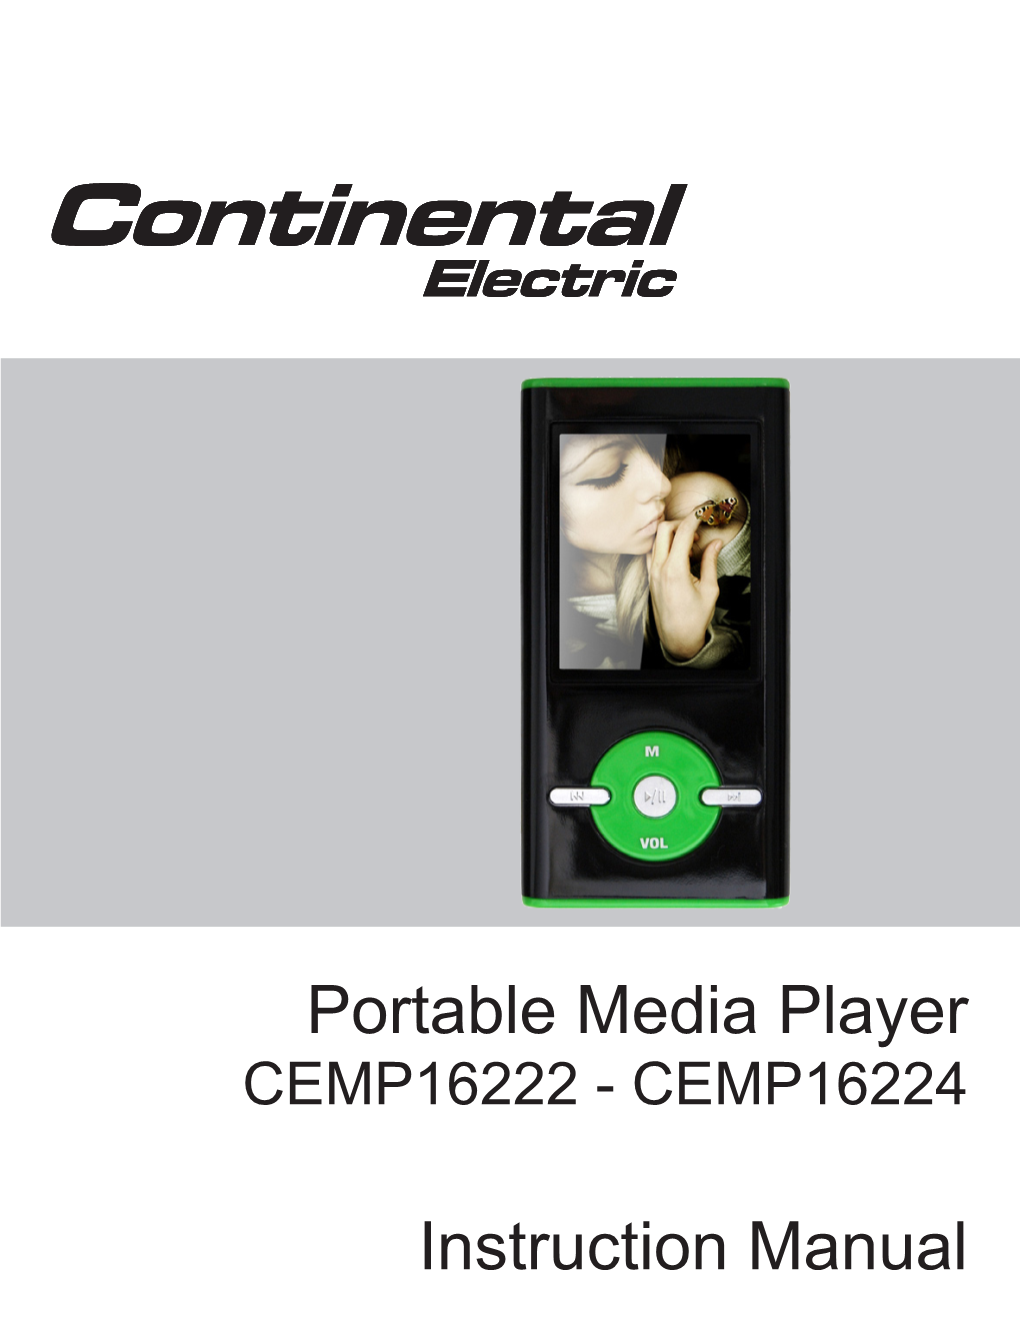 Instruction Manual Portable Media Player